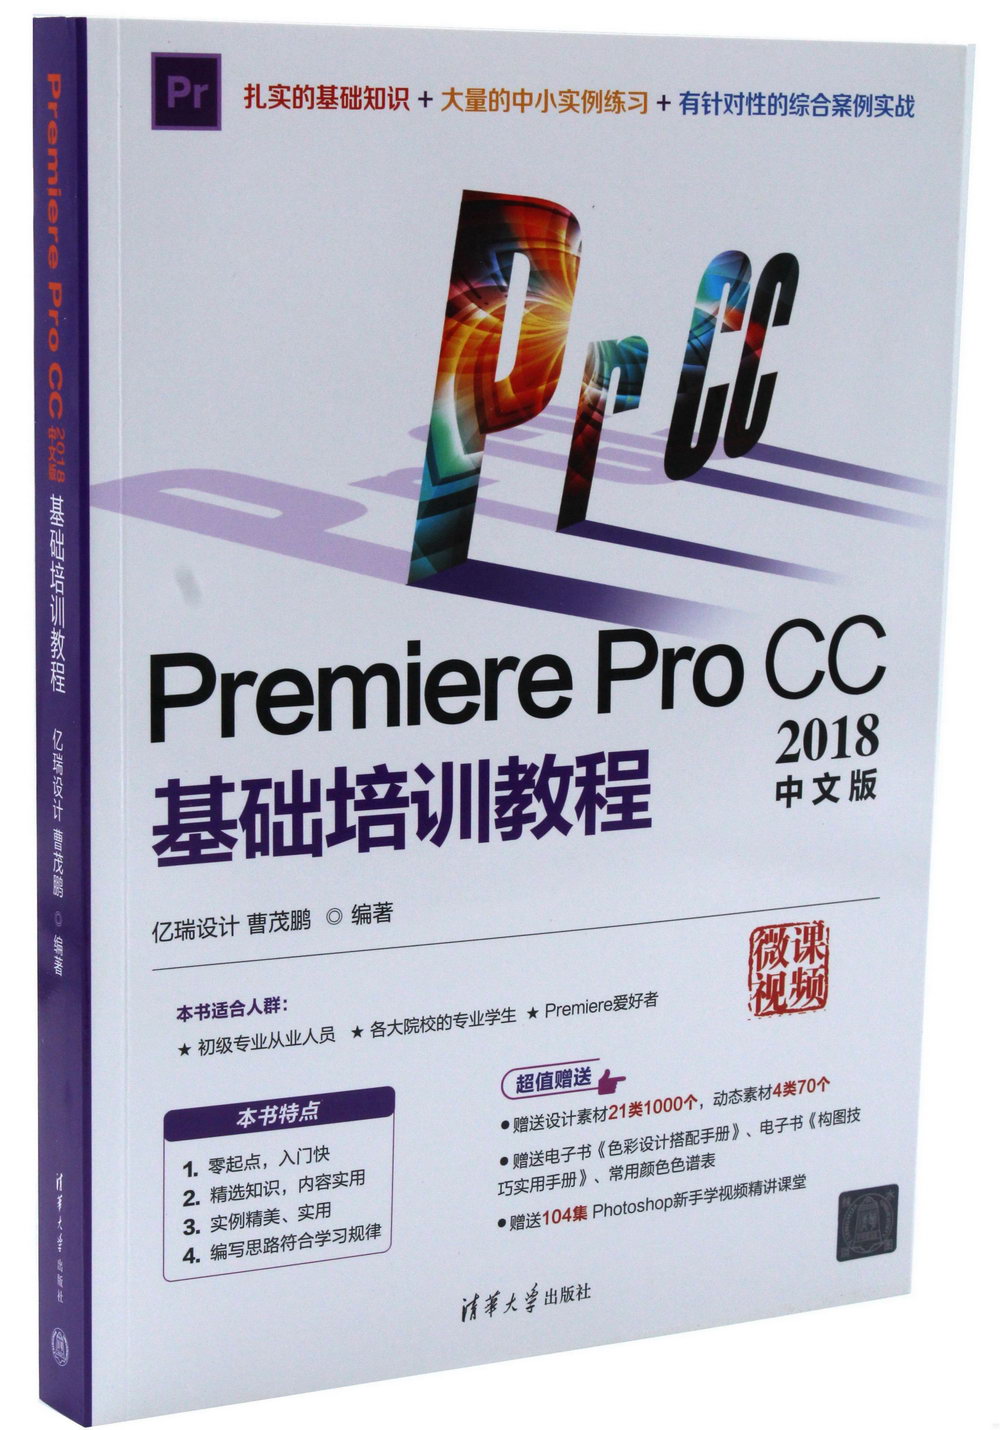 Premiere Pro CC 2018中文版基礎培訓教程